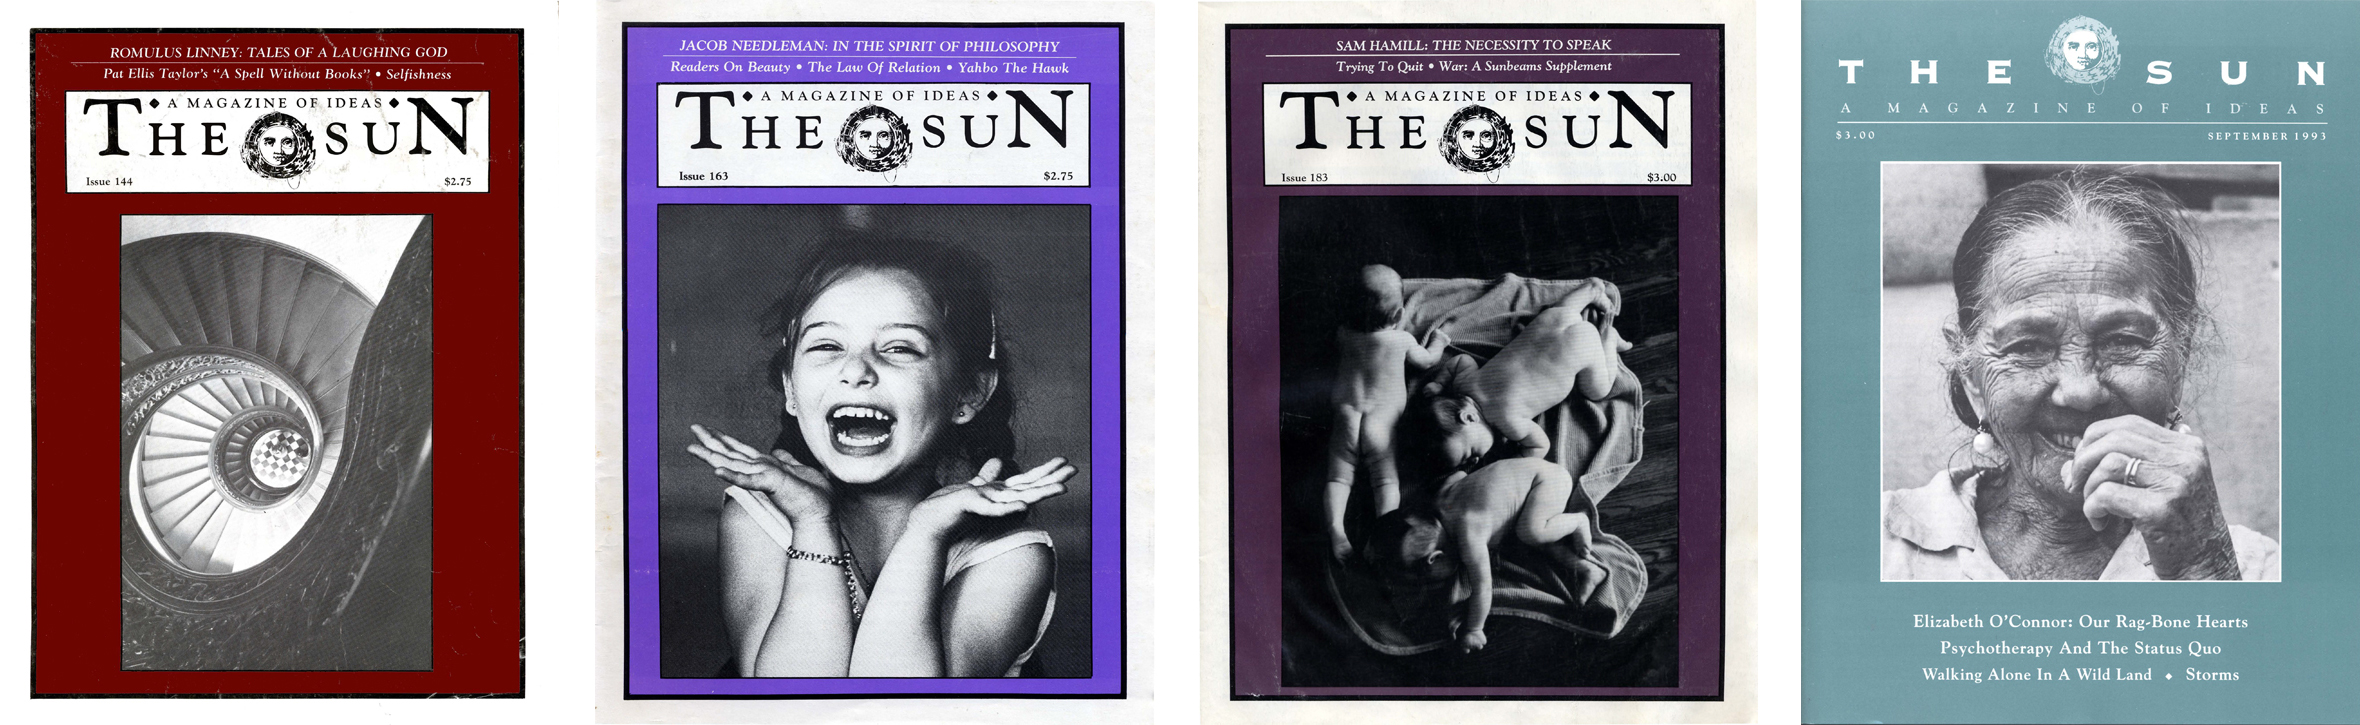 457 - Sun - Covers 1987-1993